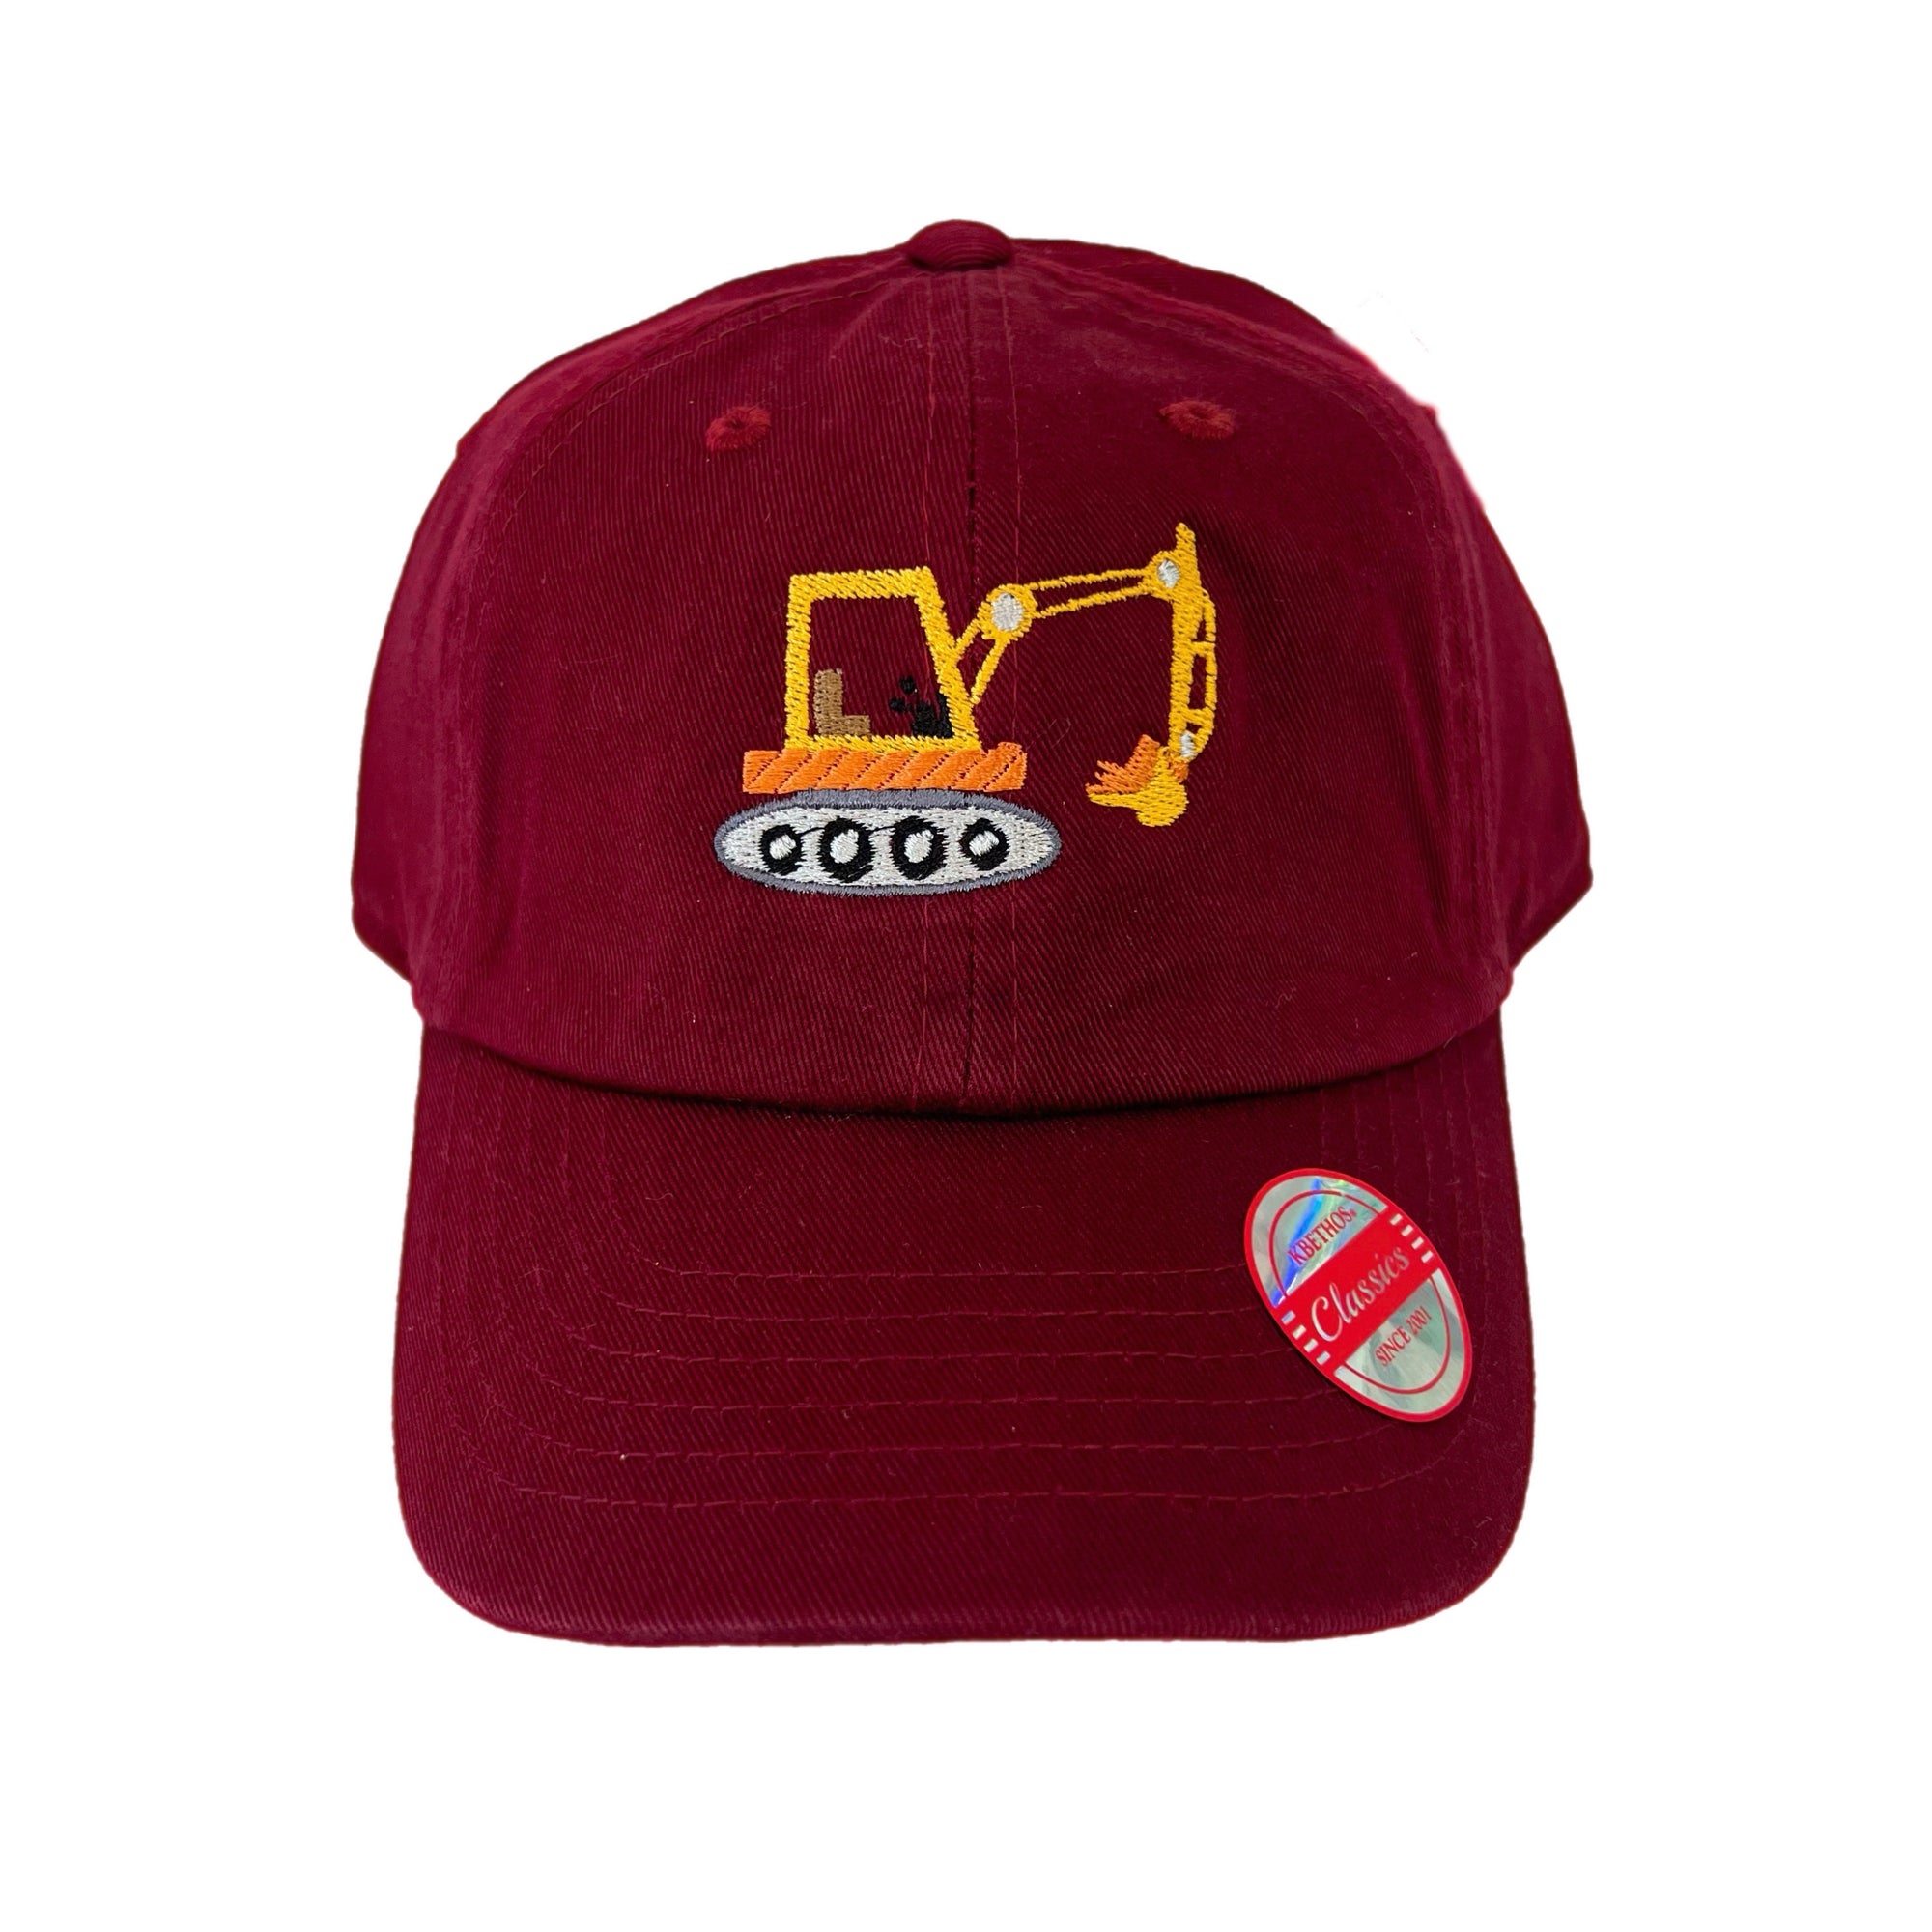 Kids Embroidered Baseball Hat | Construction Digger | Maroon